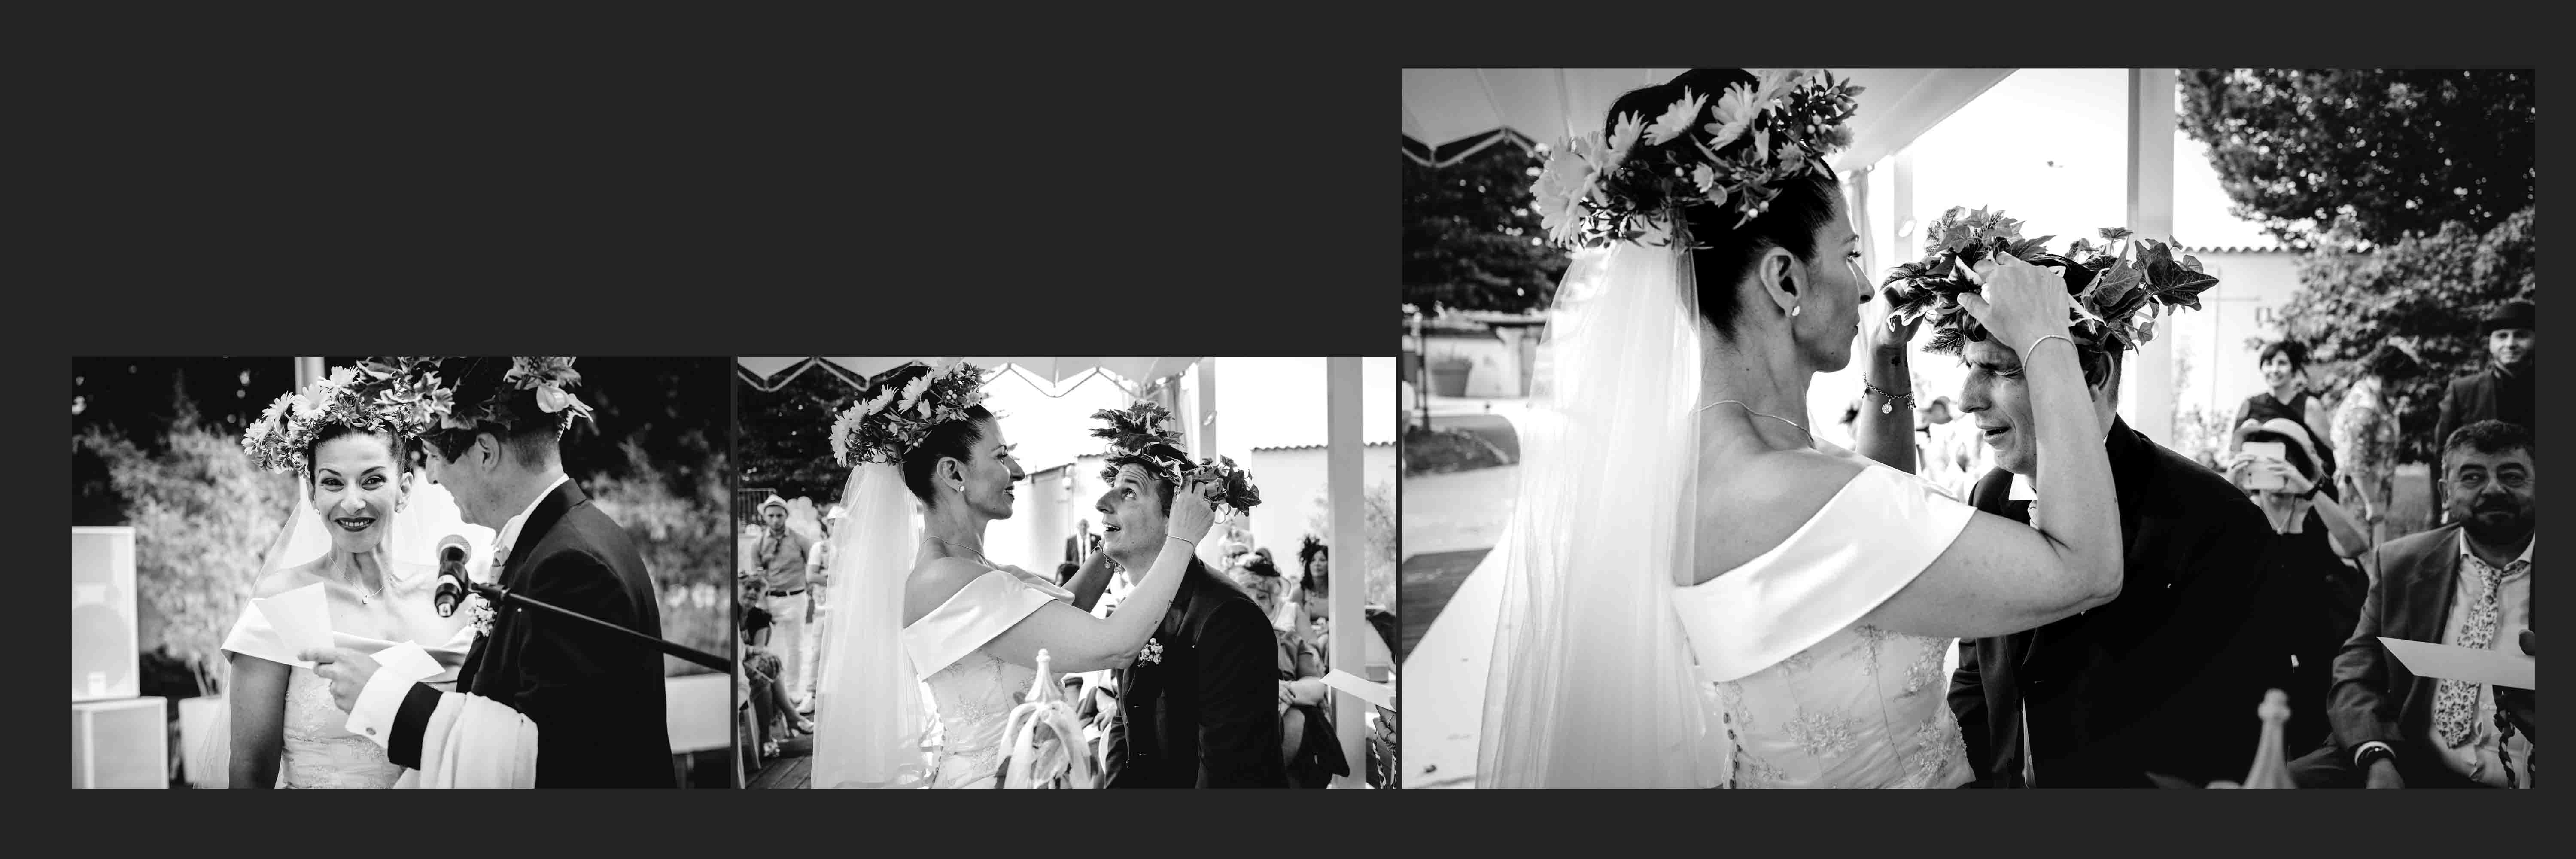 monicasica_fotografo matrimonio_torino_saluzzo_envets saluzzo_weddingday_weddingphotographer-32